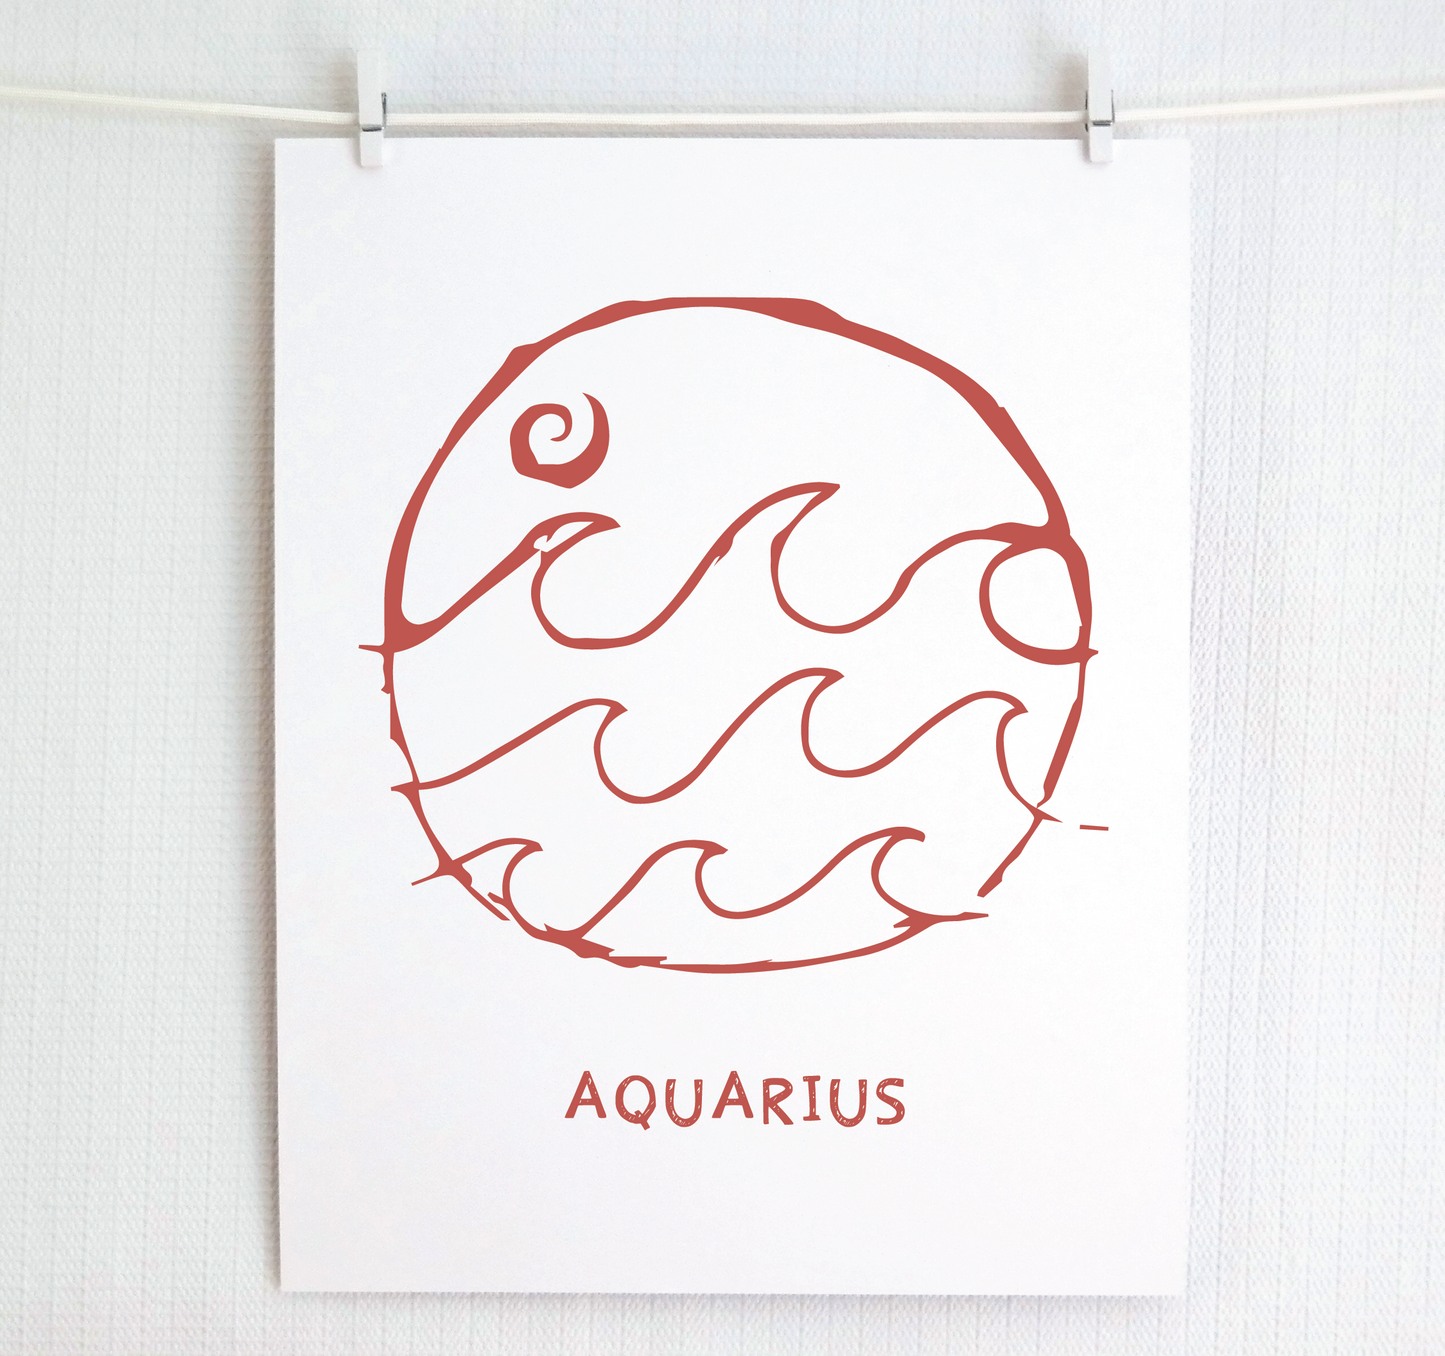 Signs of the Zodiac: AQUARIUS